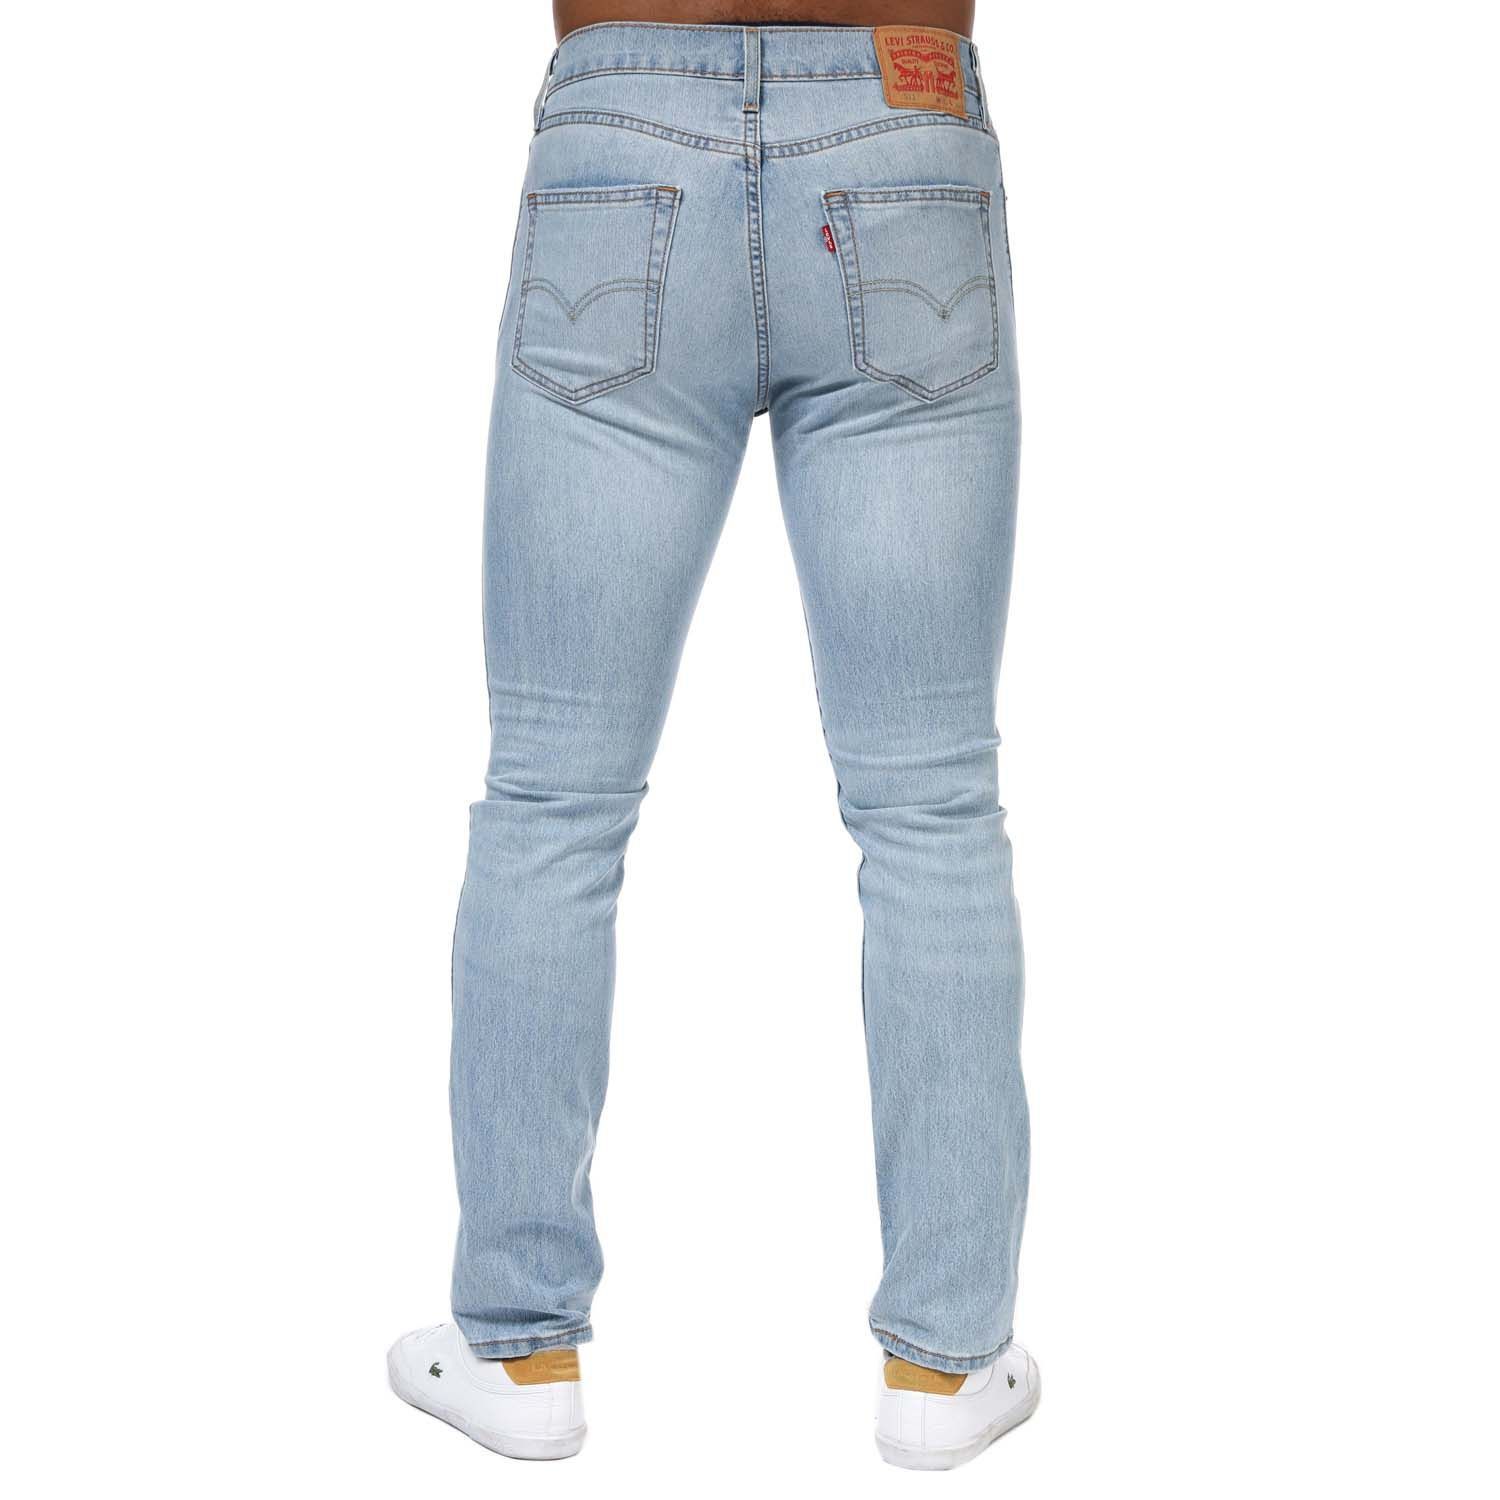 Men's Levis 511 Accelerate Cool Slim Jeans in Light Blue